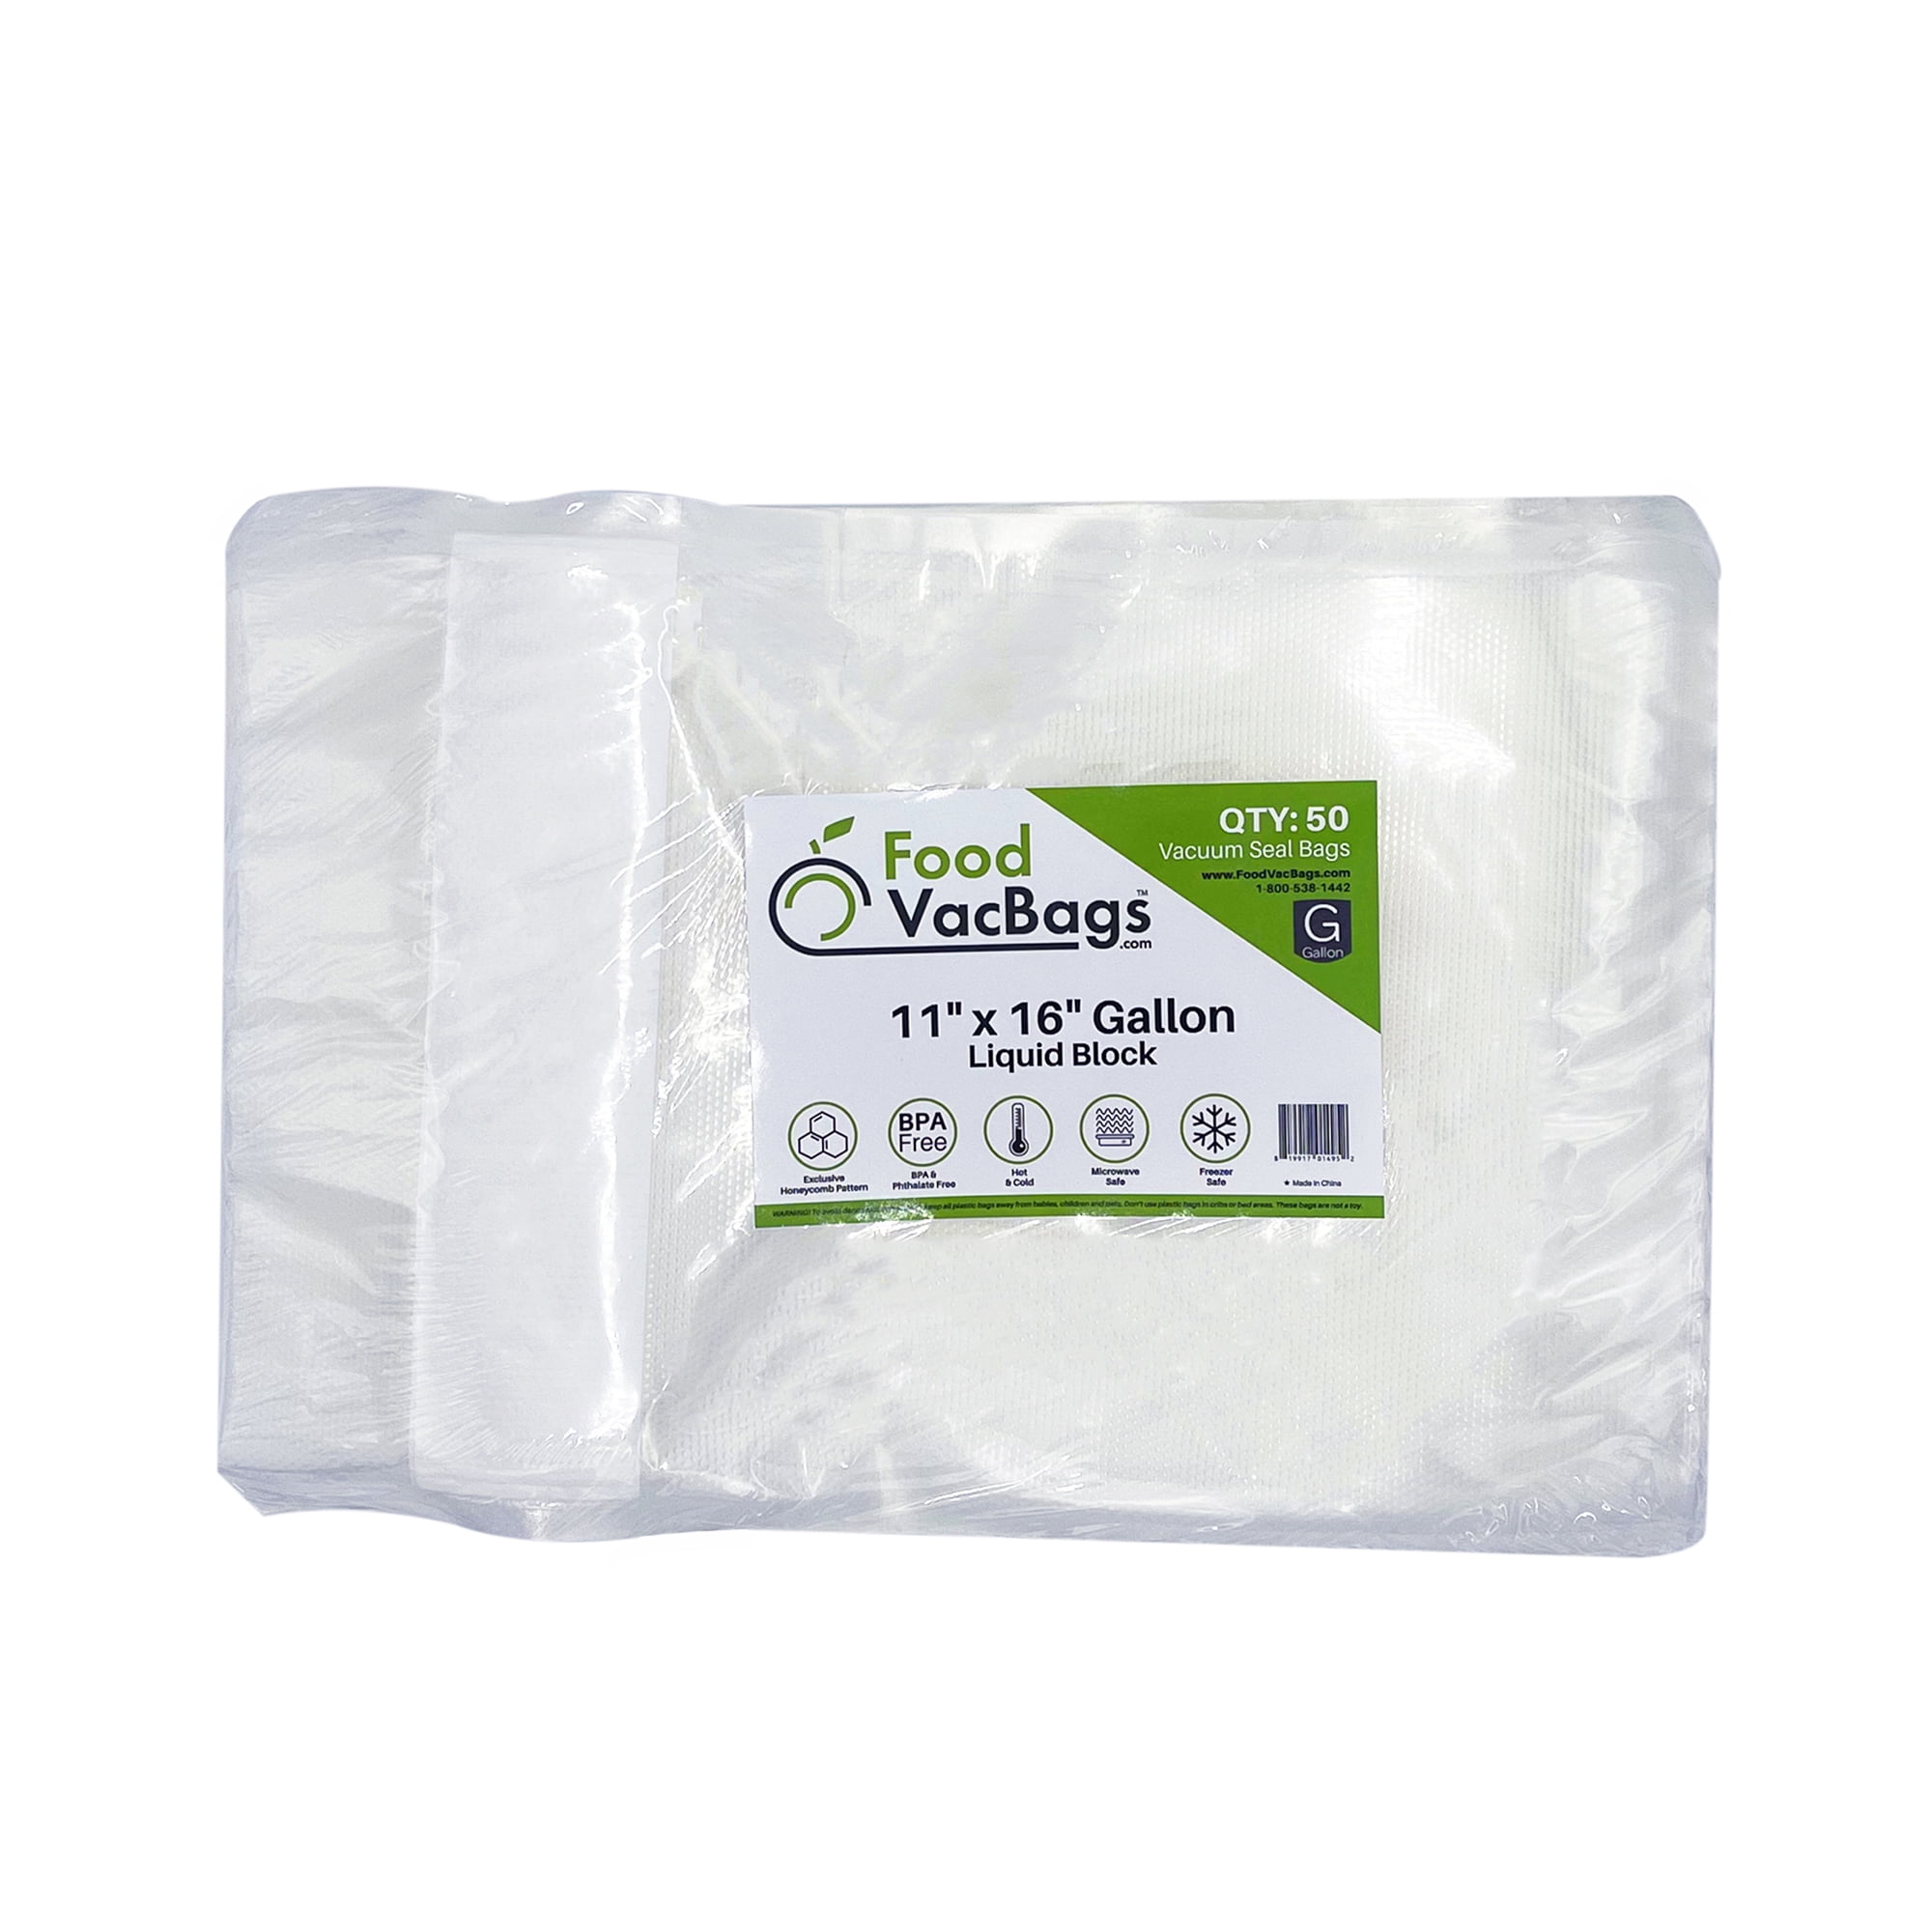 FoodVacBags - 11 x 16 Liquid Block Gallon Vacuum Seal Bags - 50